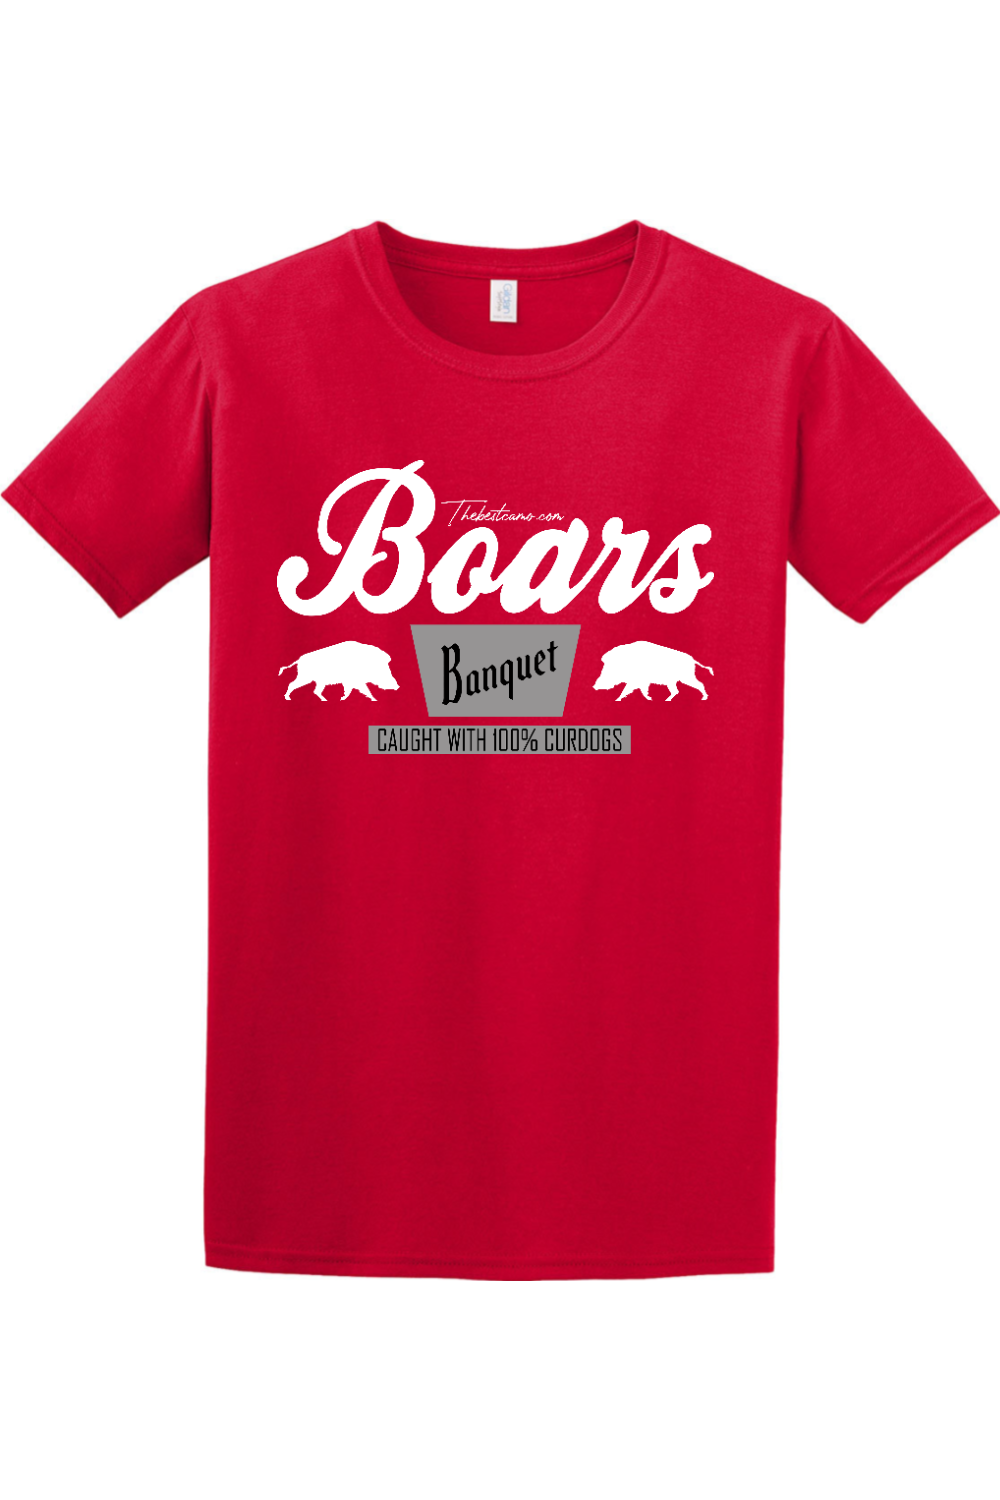 boars beer dark color t-shirts